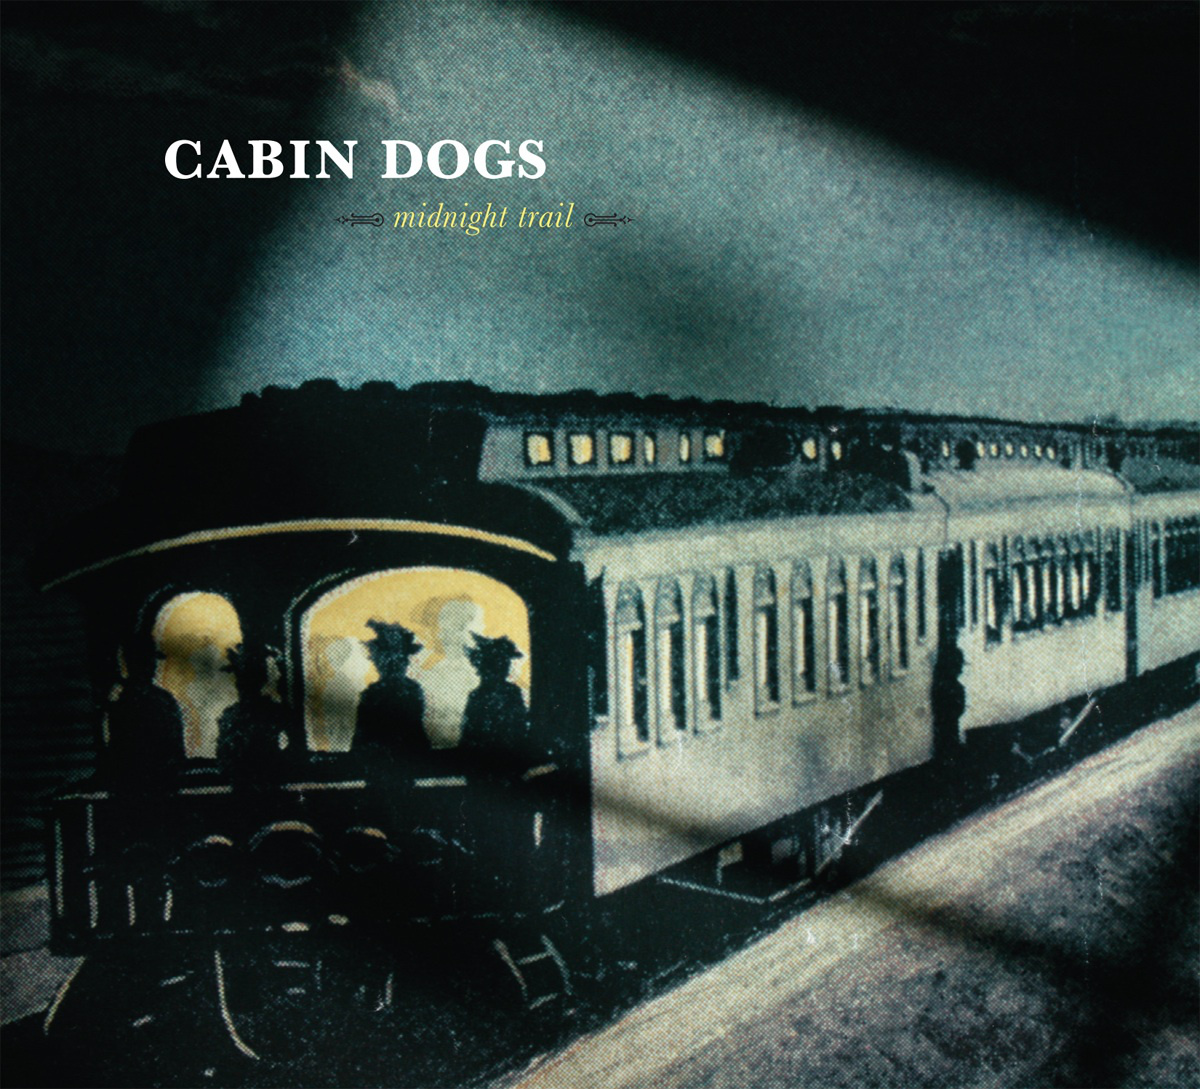 Cabin Dogs “Midnight Trail”